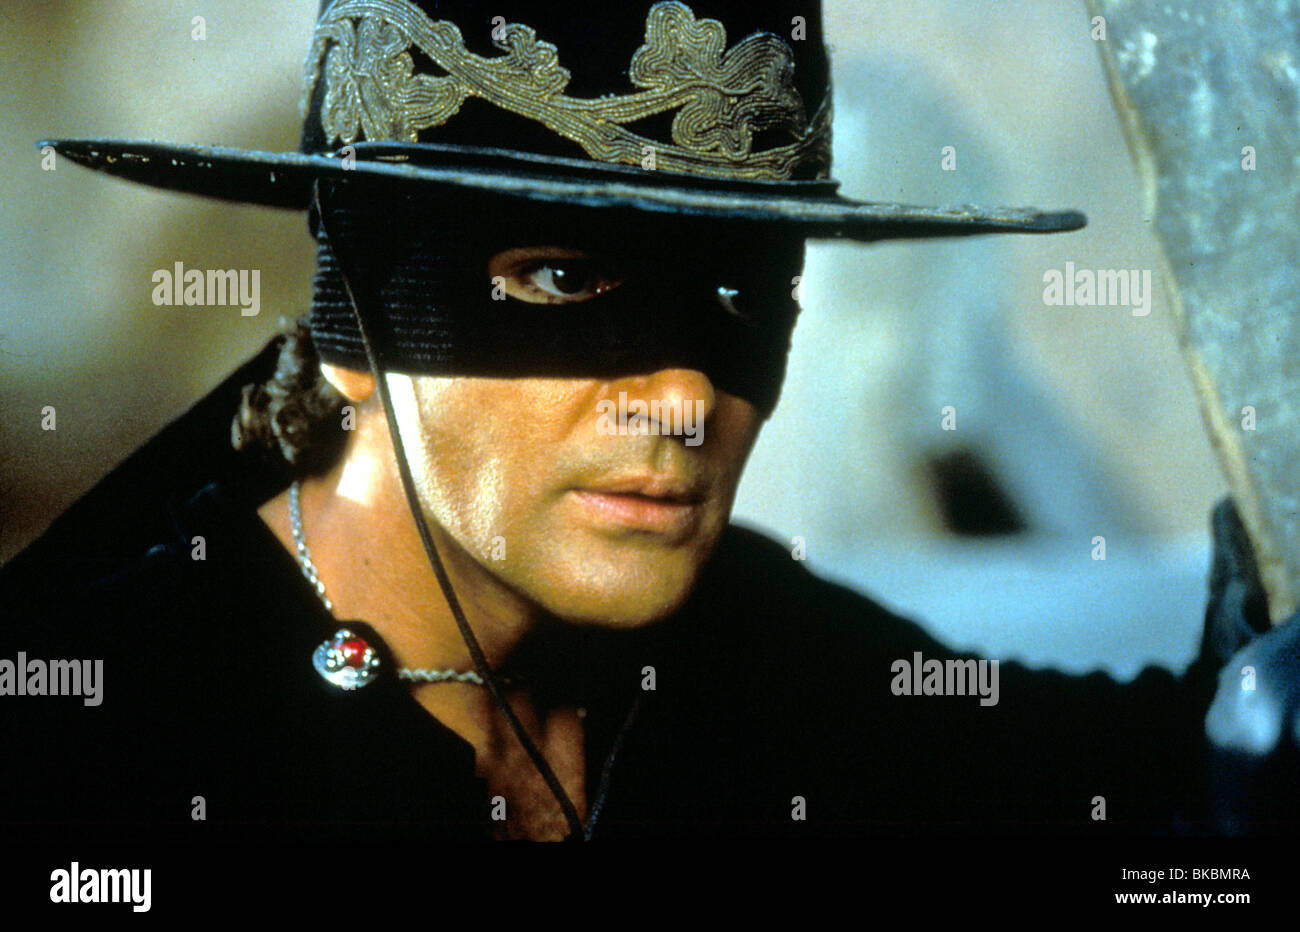 Take Antonio Banderas Home With This Lifelike 12-Inch Zorro